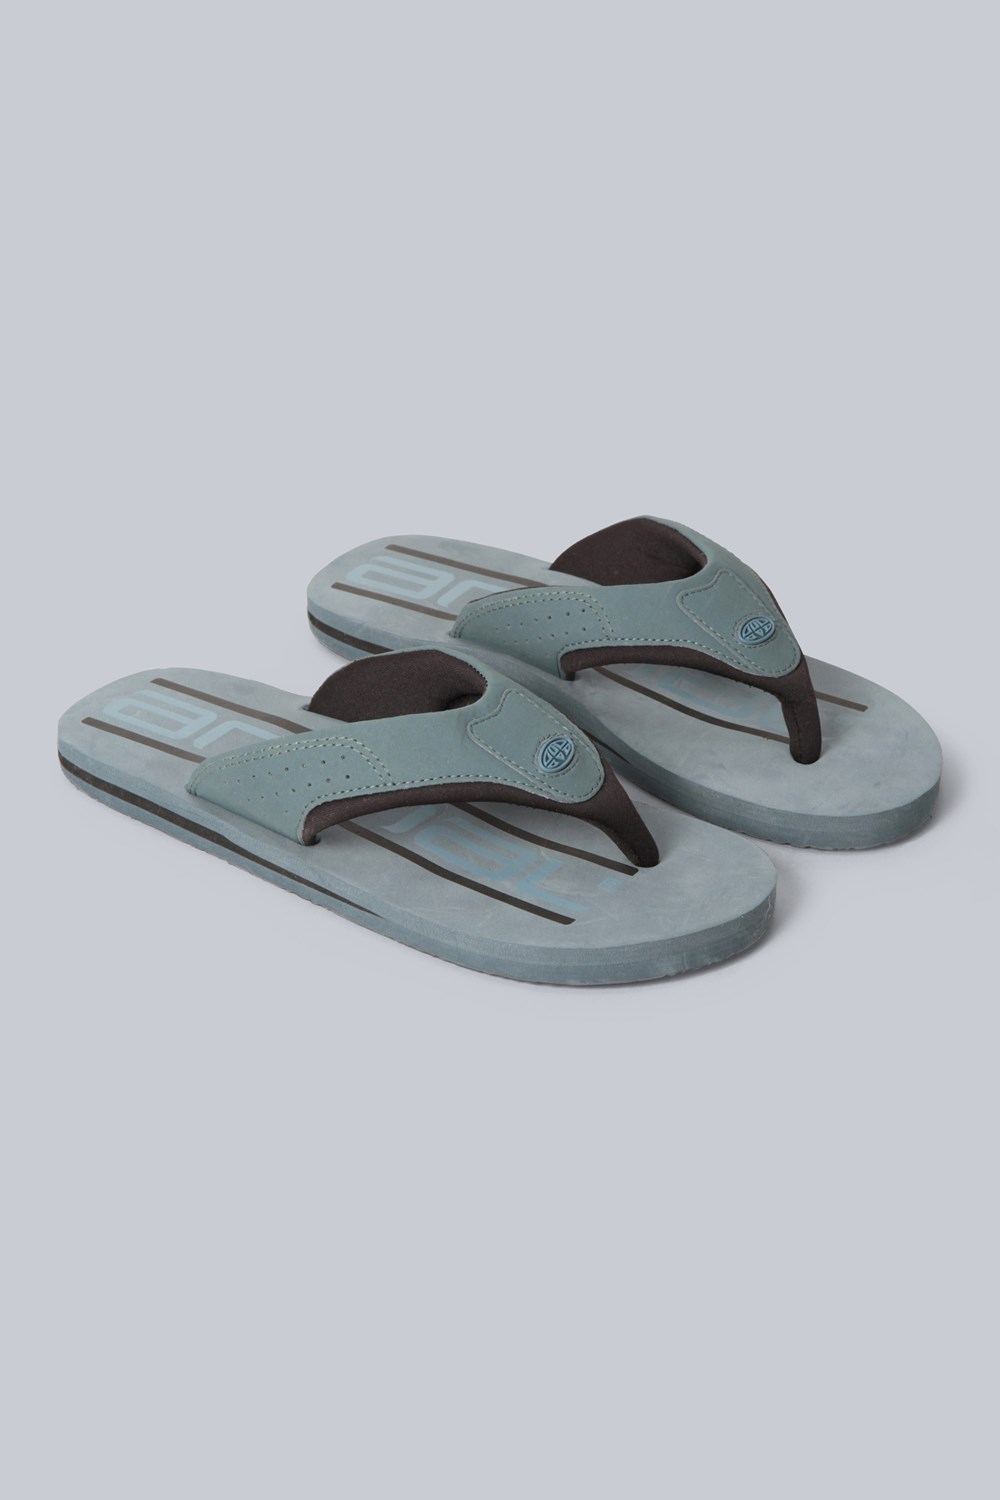 Animal Mens Jekyl Logo Flip Flop Men Beach Summer Recycled Sandals  Lightweight | eBay